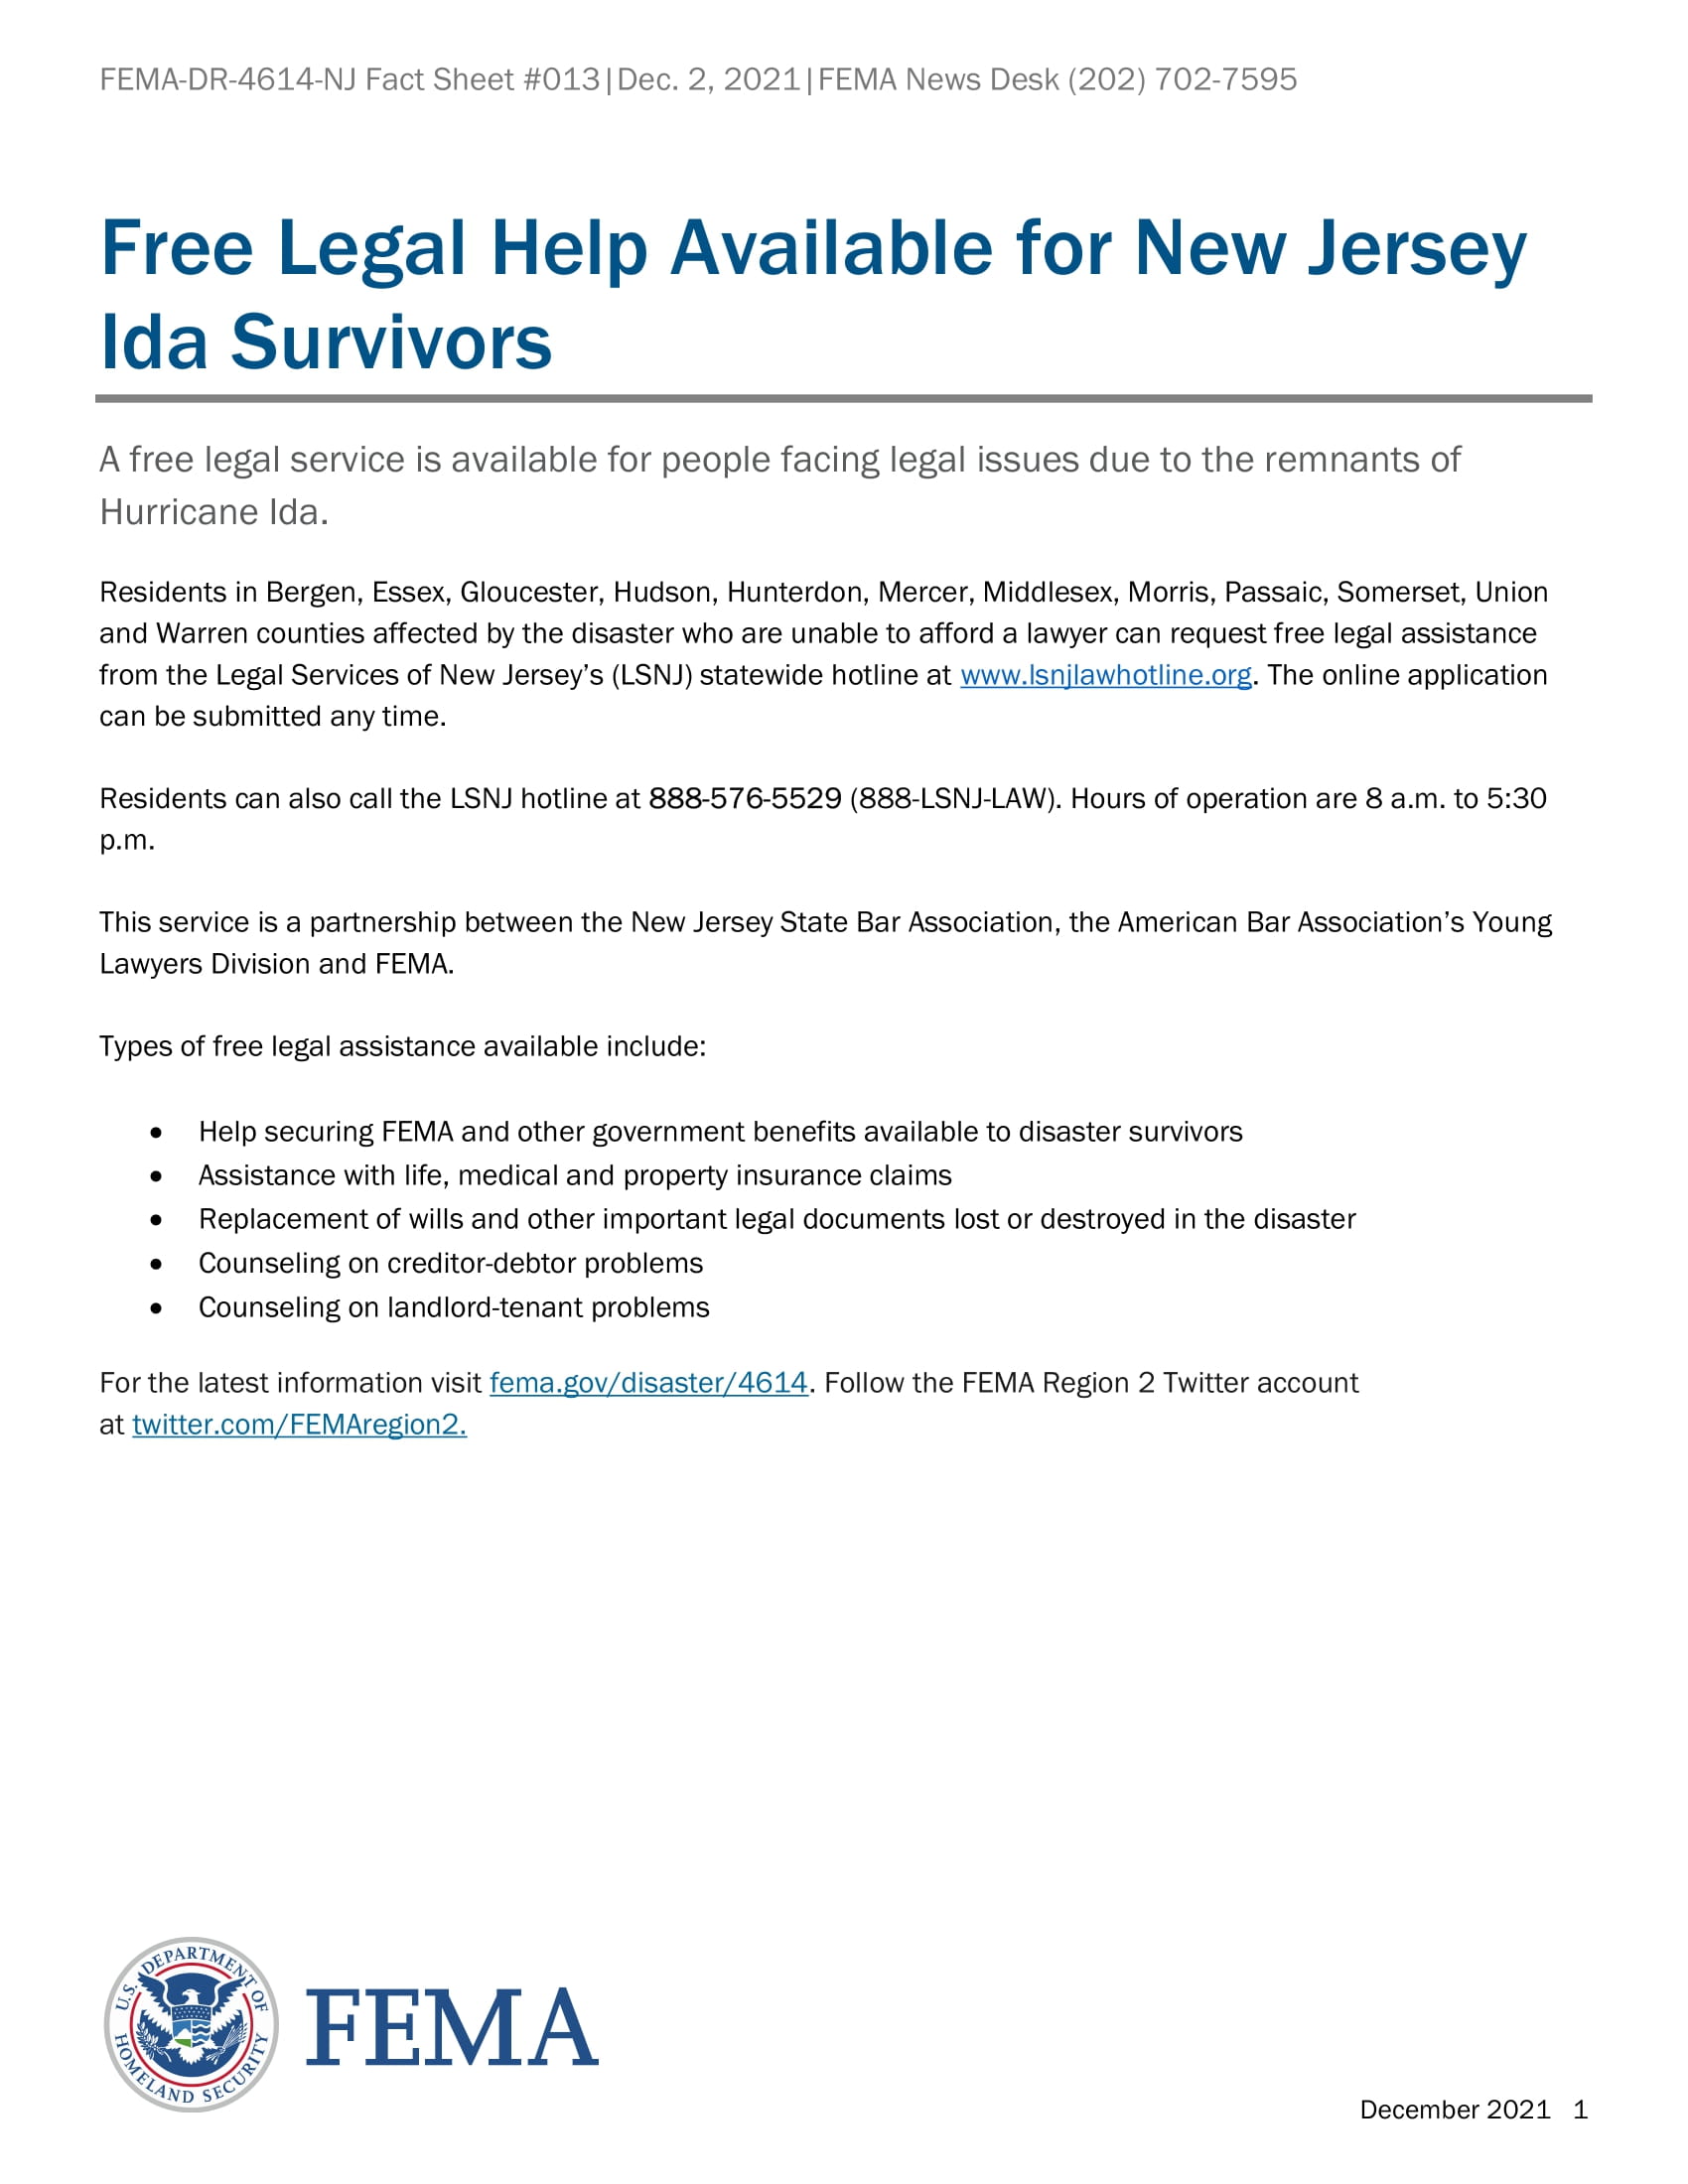 FS-DR-4614-NJ 013 Free Legal Help Available for NJ Survivors-1